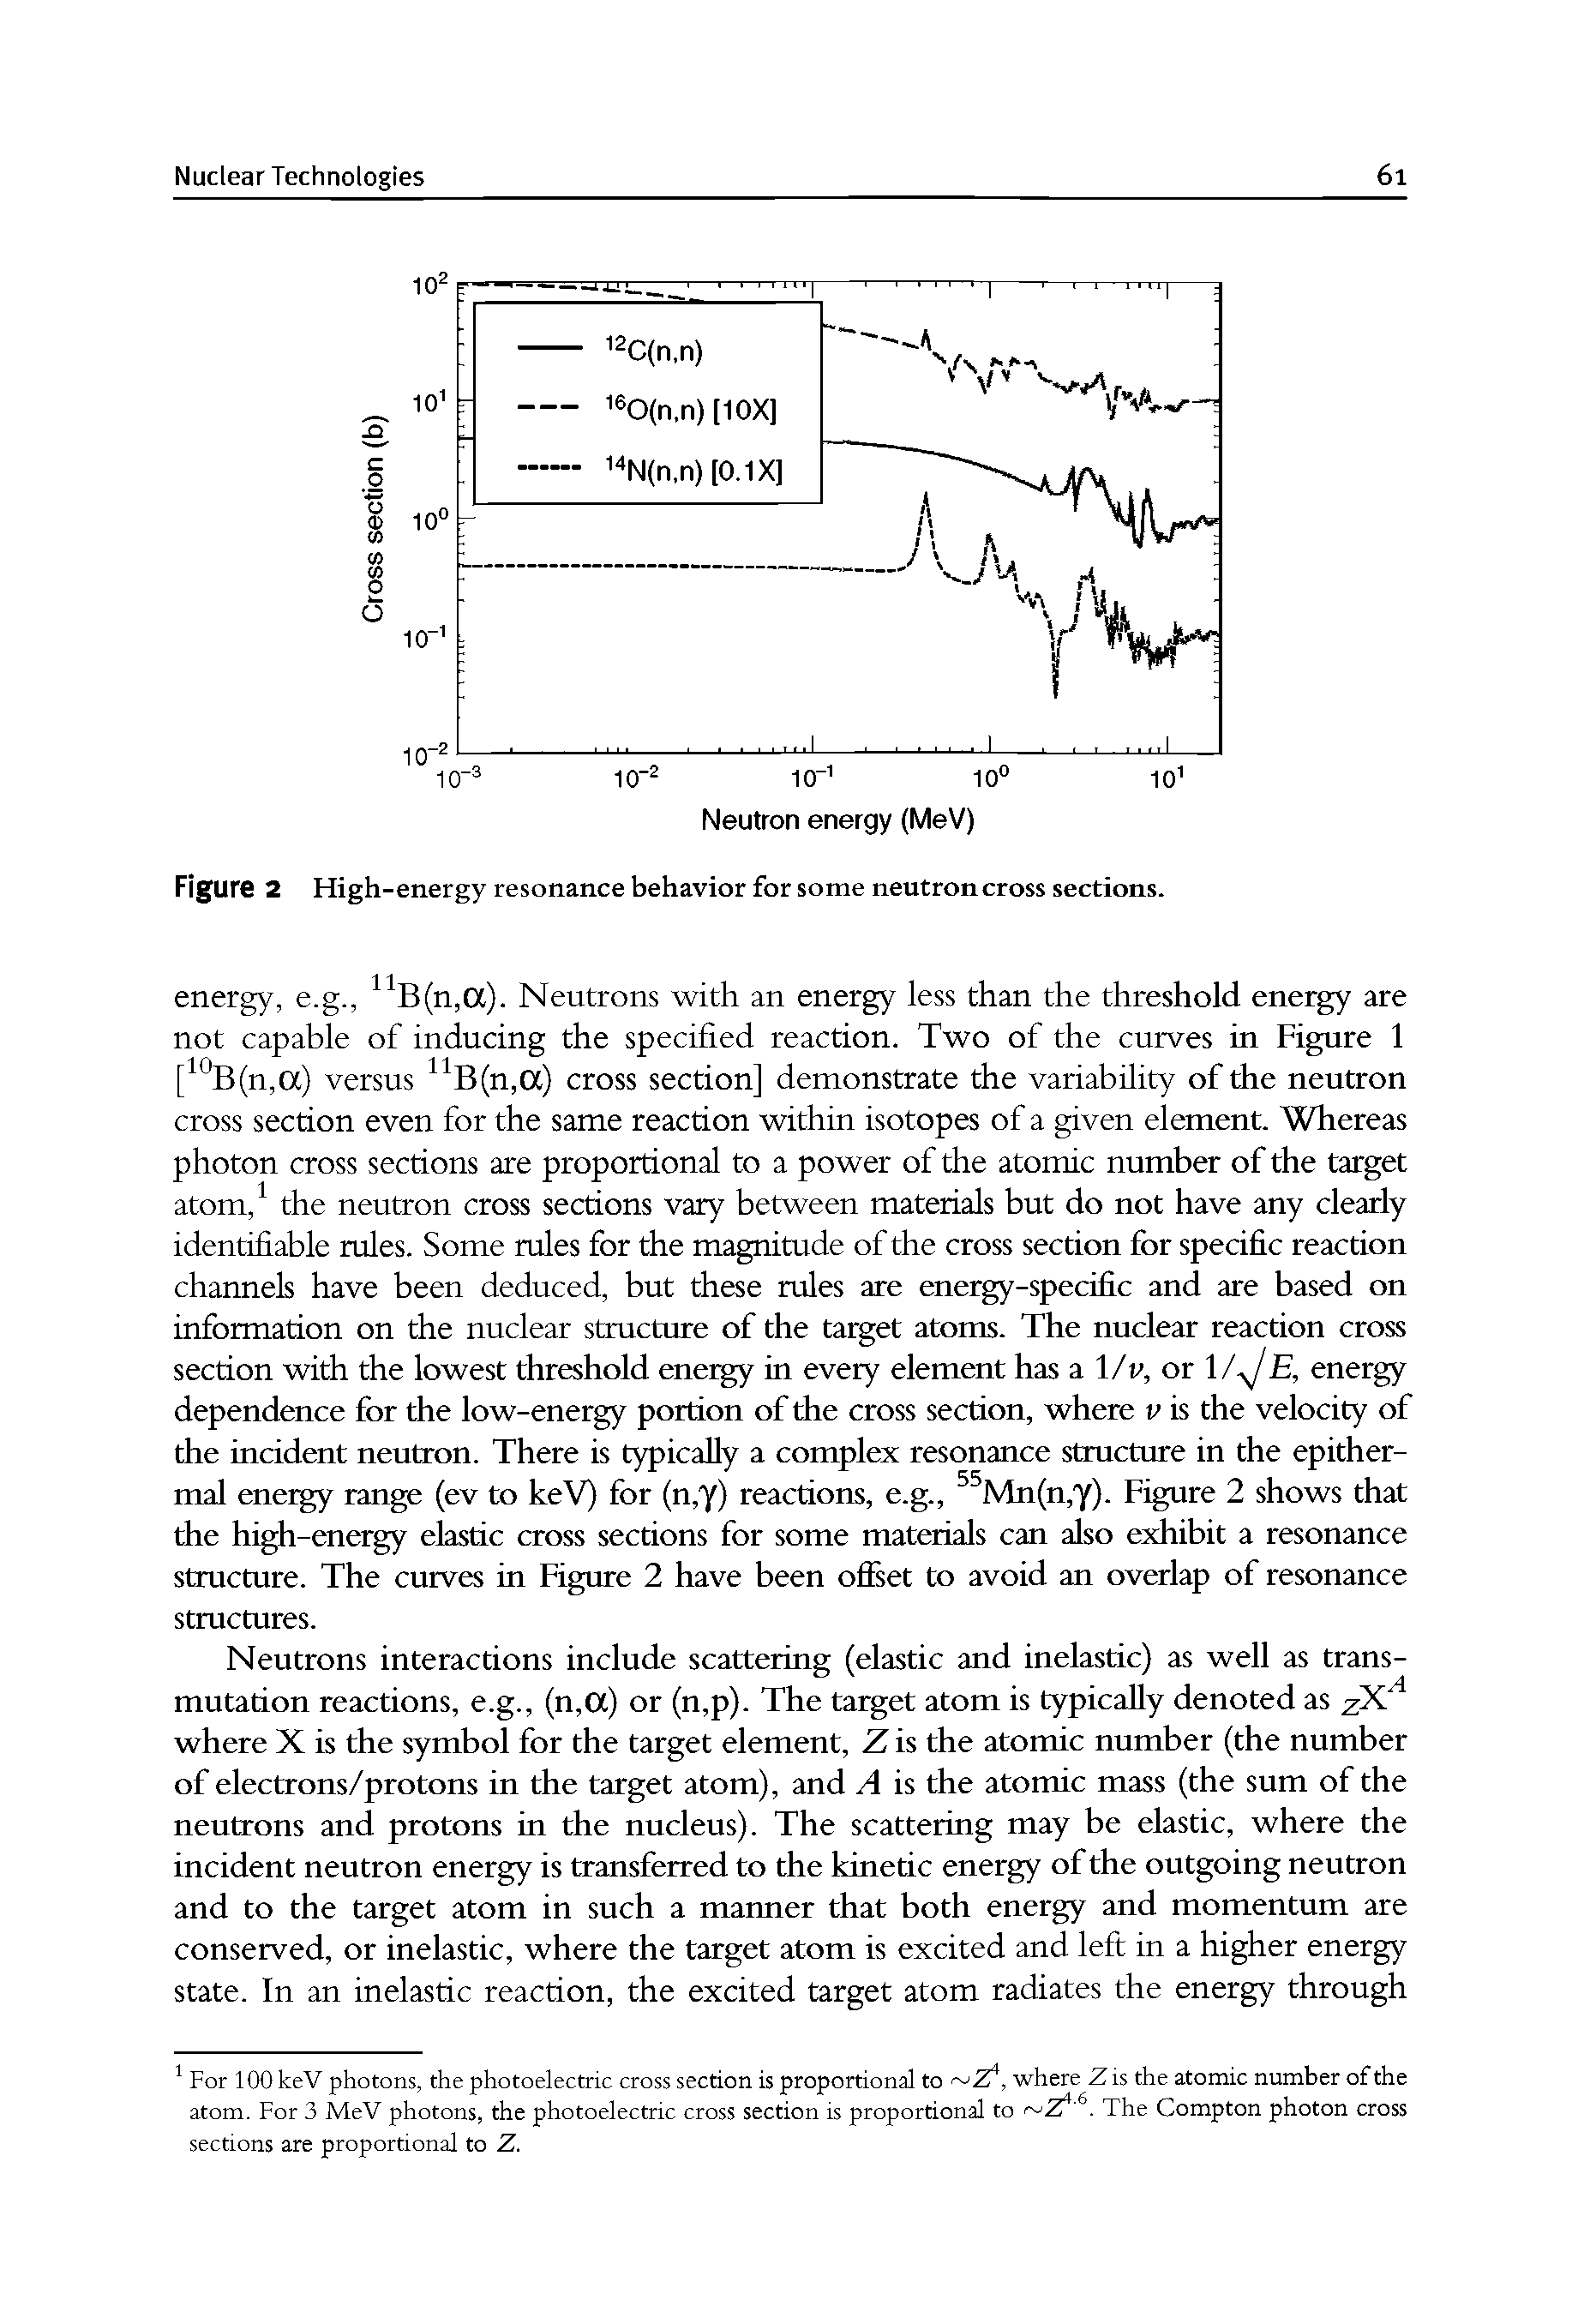 Figure 2 High-energy resonance behavior for some neutron cross sections.